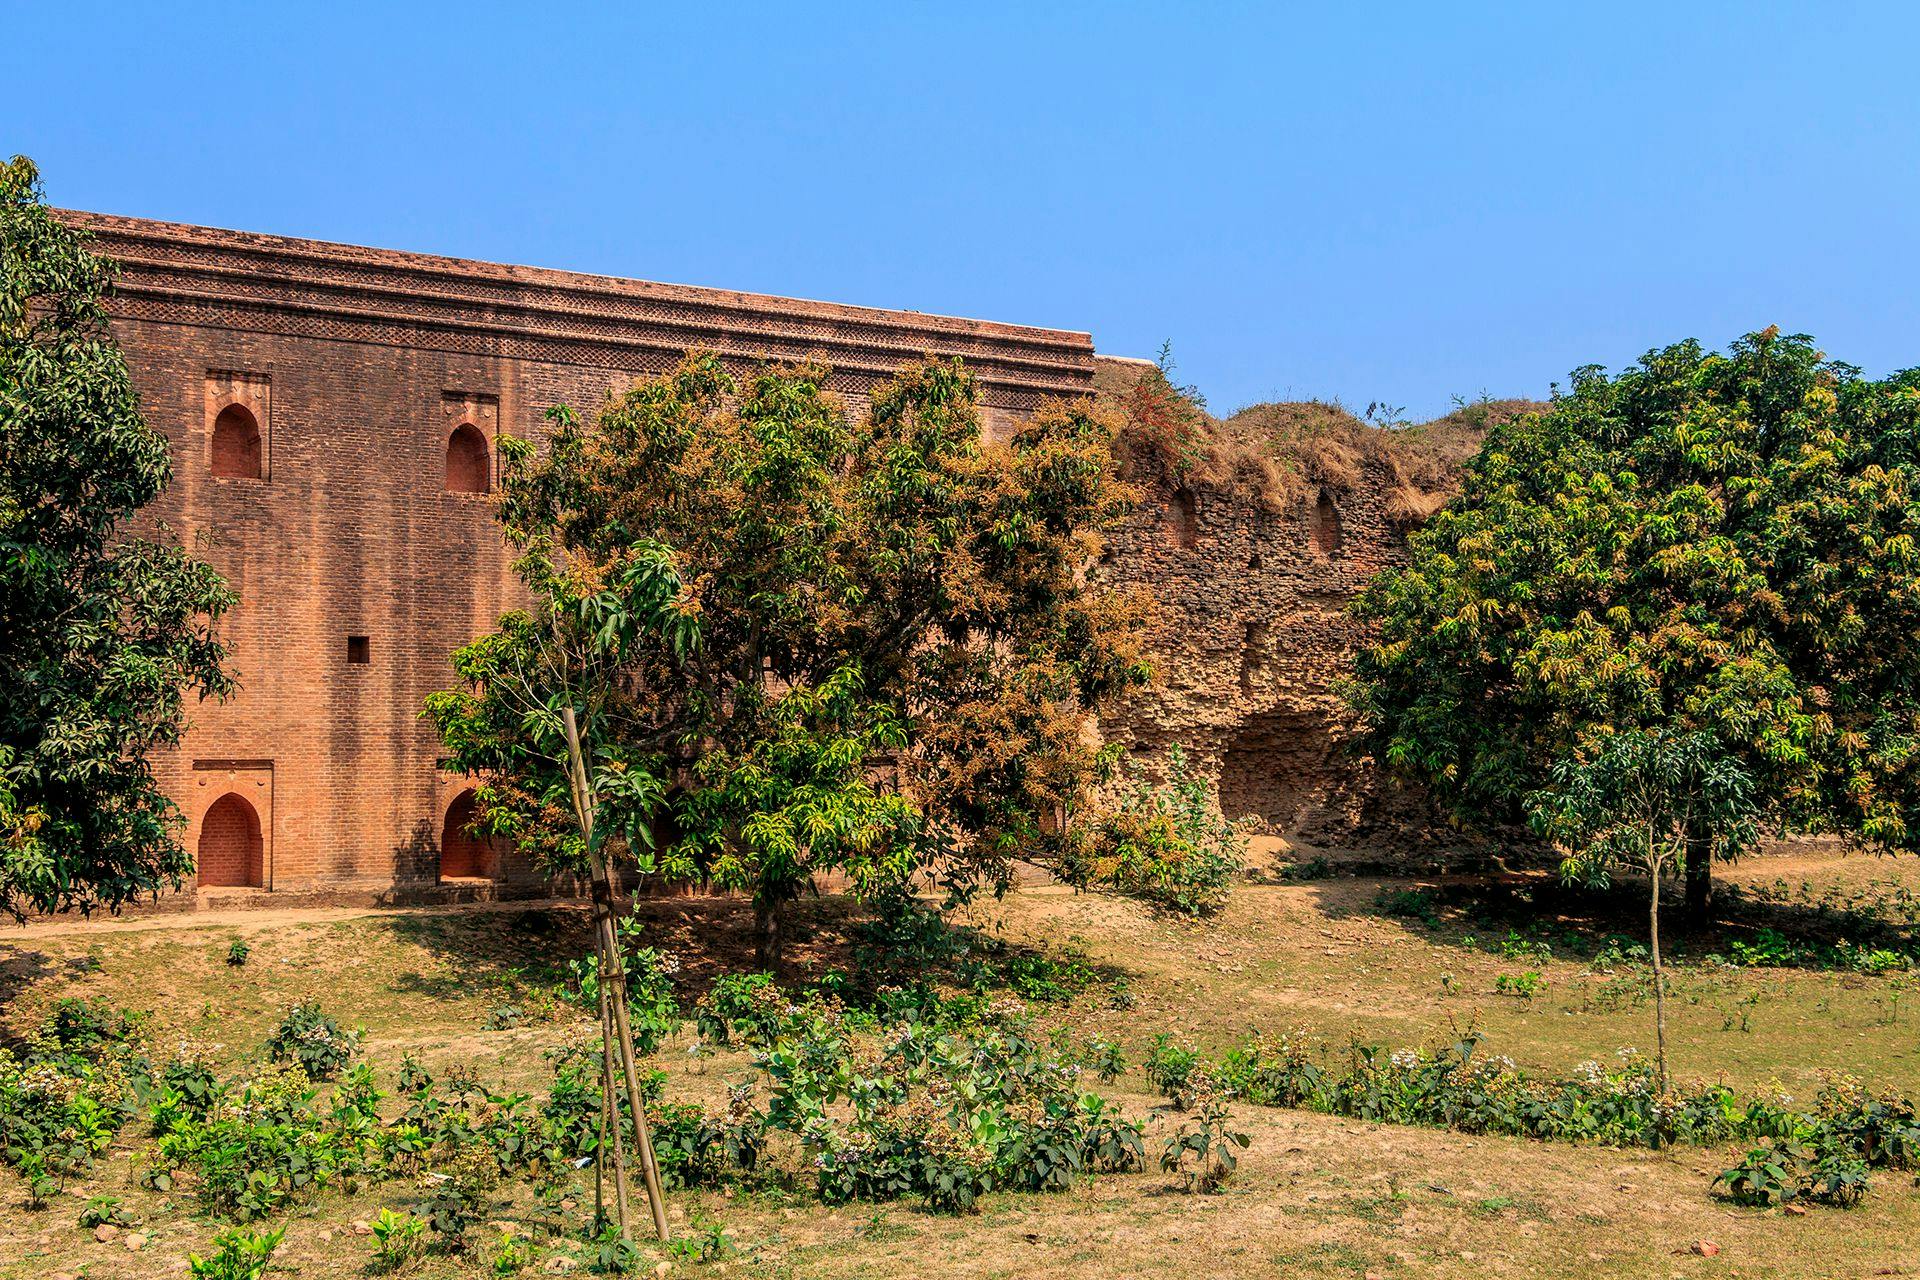 The Bais Gaji Pracheer or Wall of the citadel of Gauda